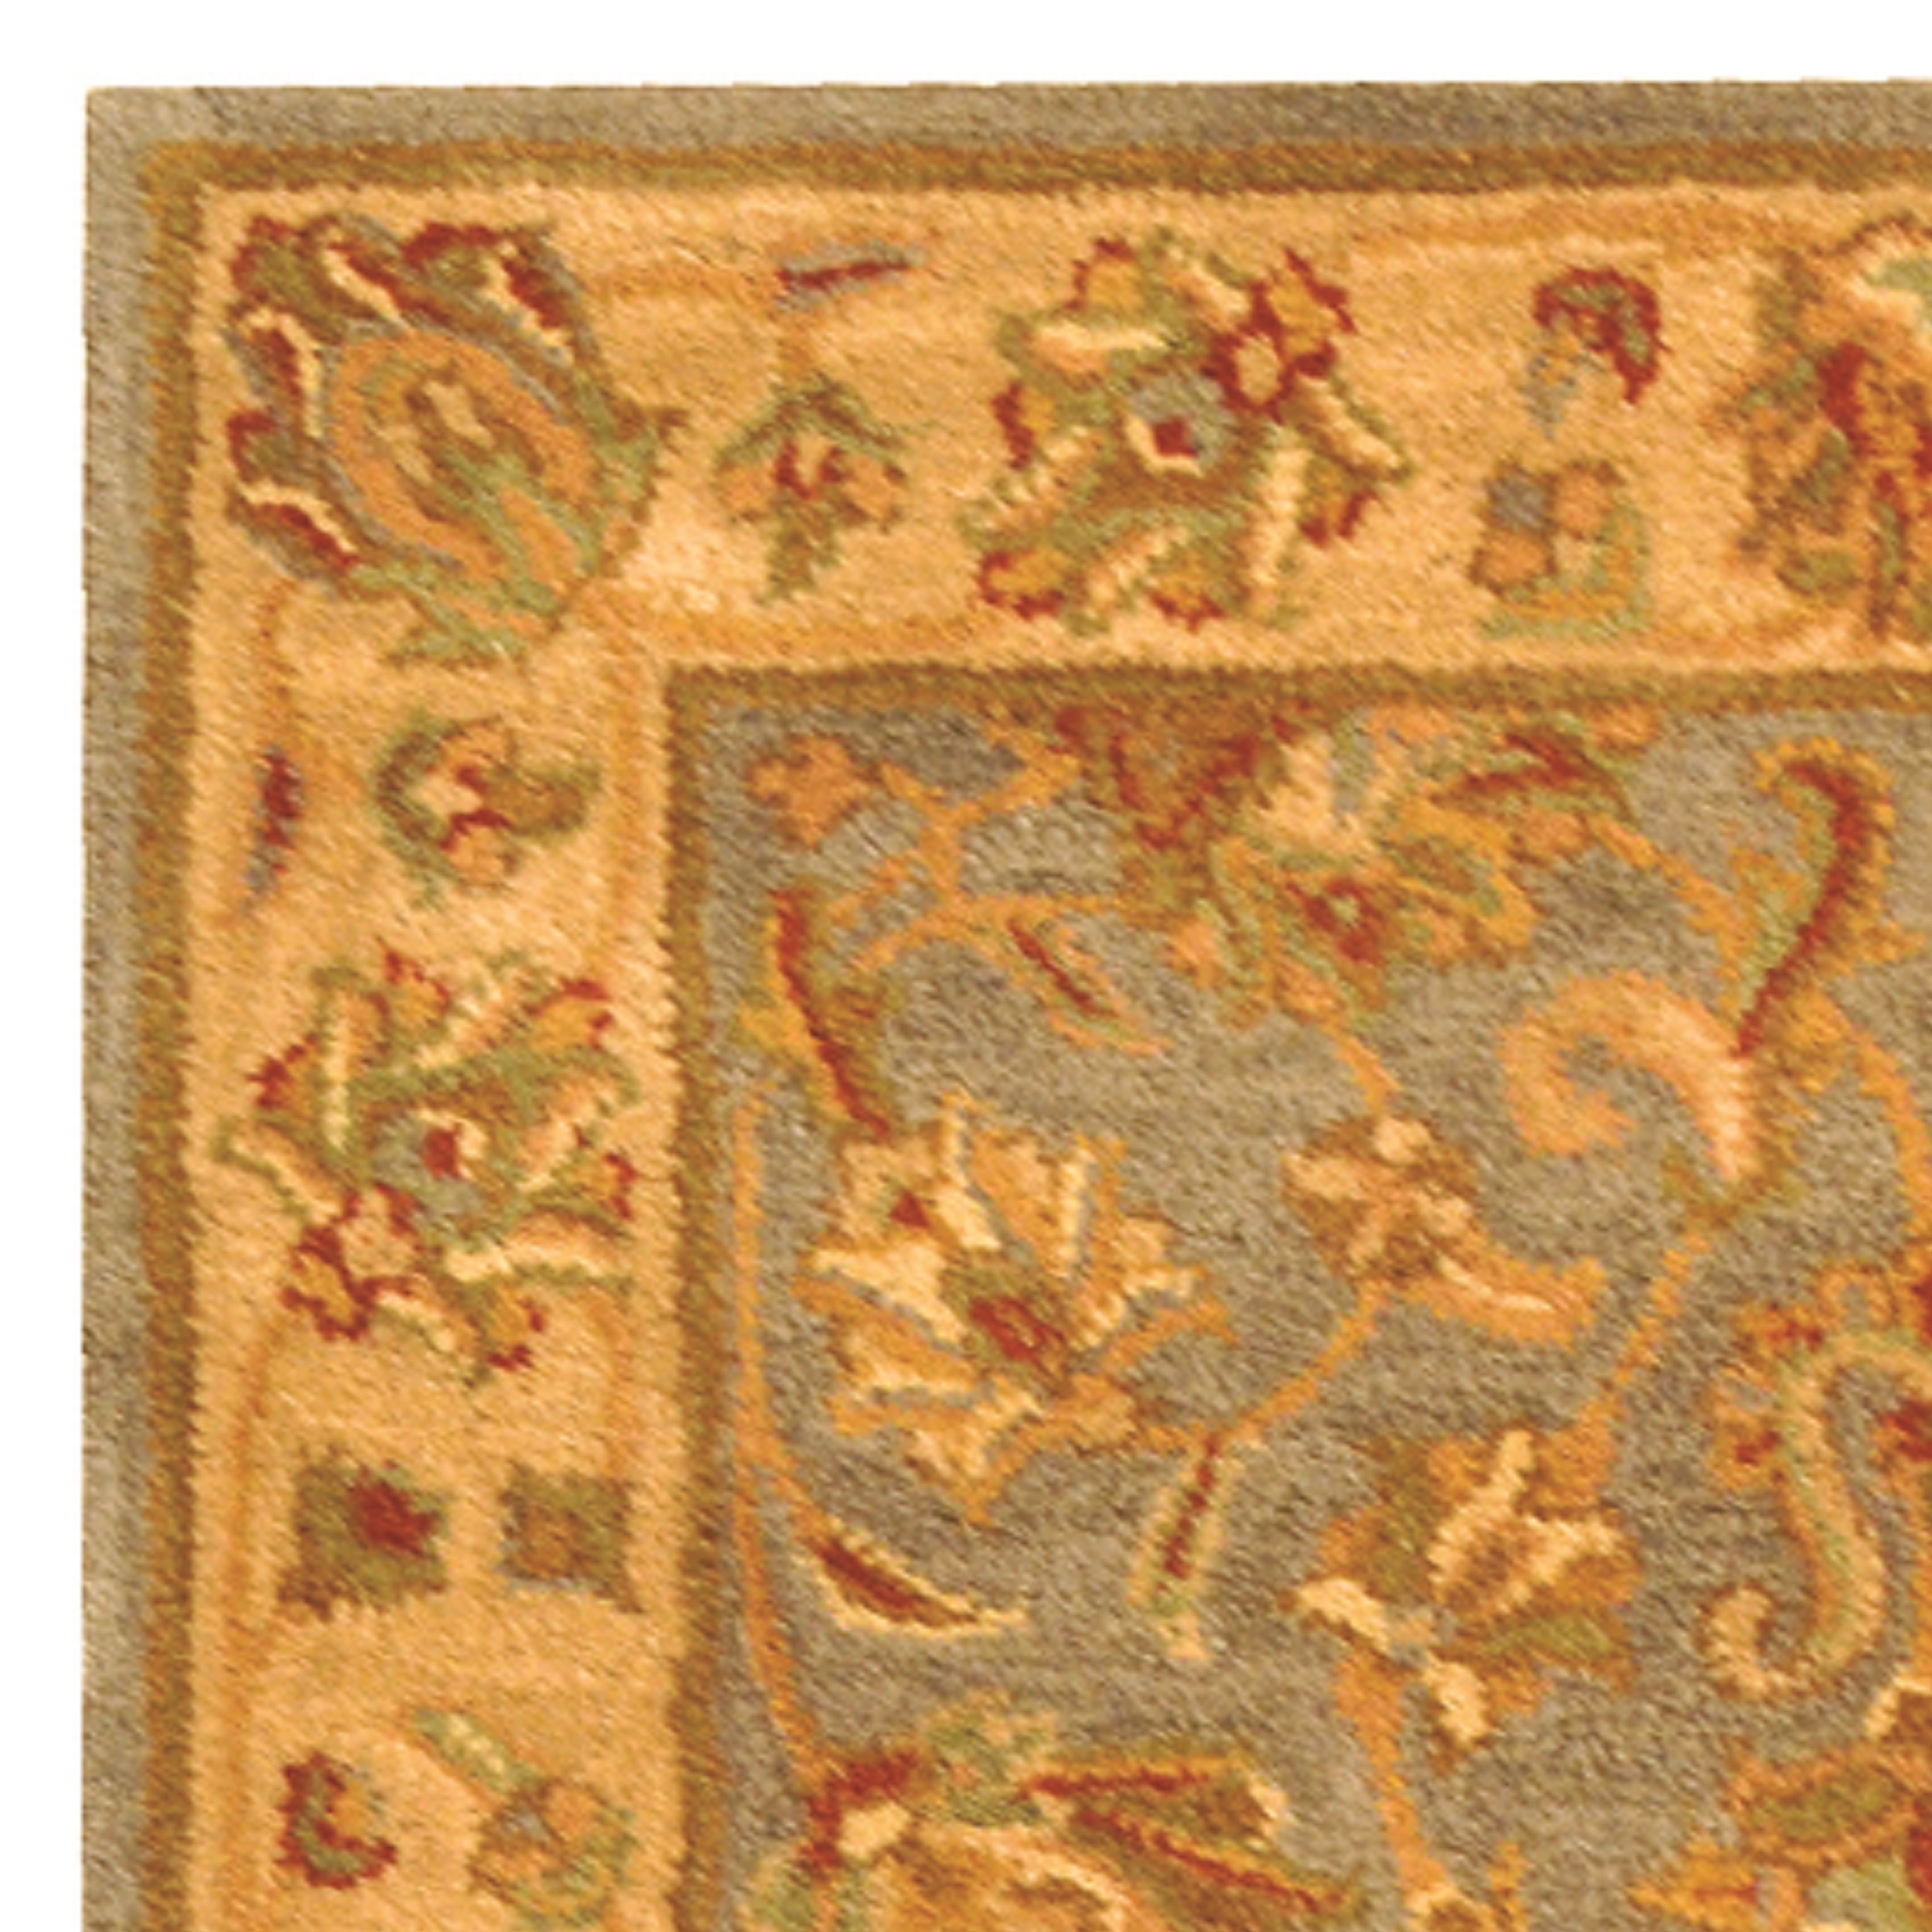 SAFAVIEH Heritage Regis Traditional Wool Area Rug, Blue/Beige, 6' x 9' - image 2 of 4